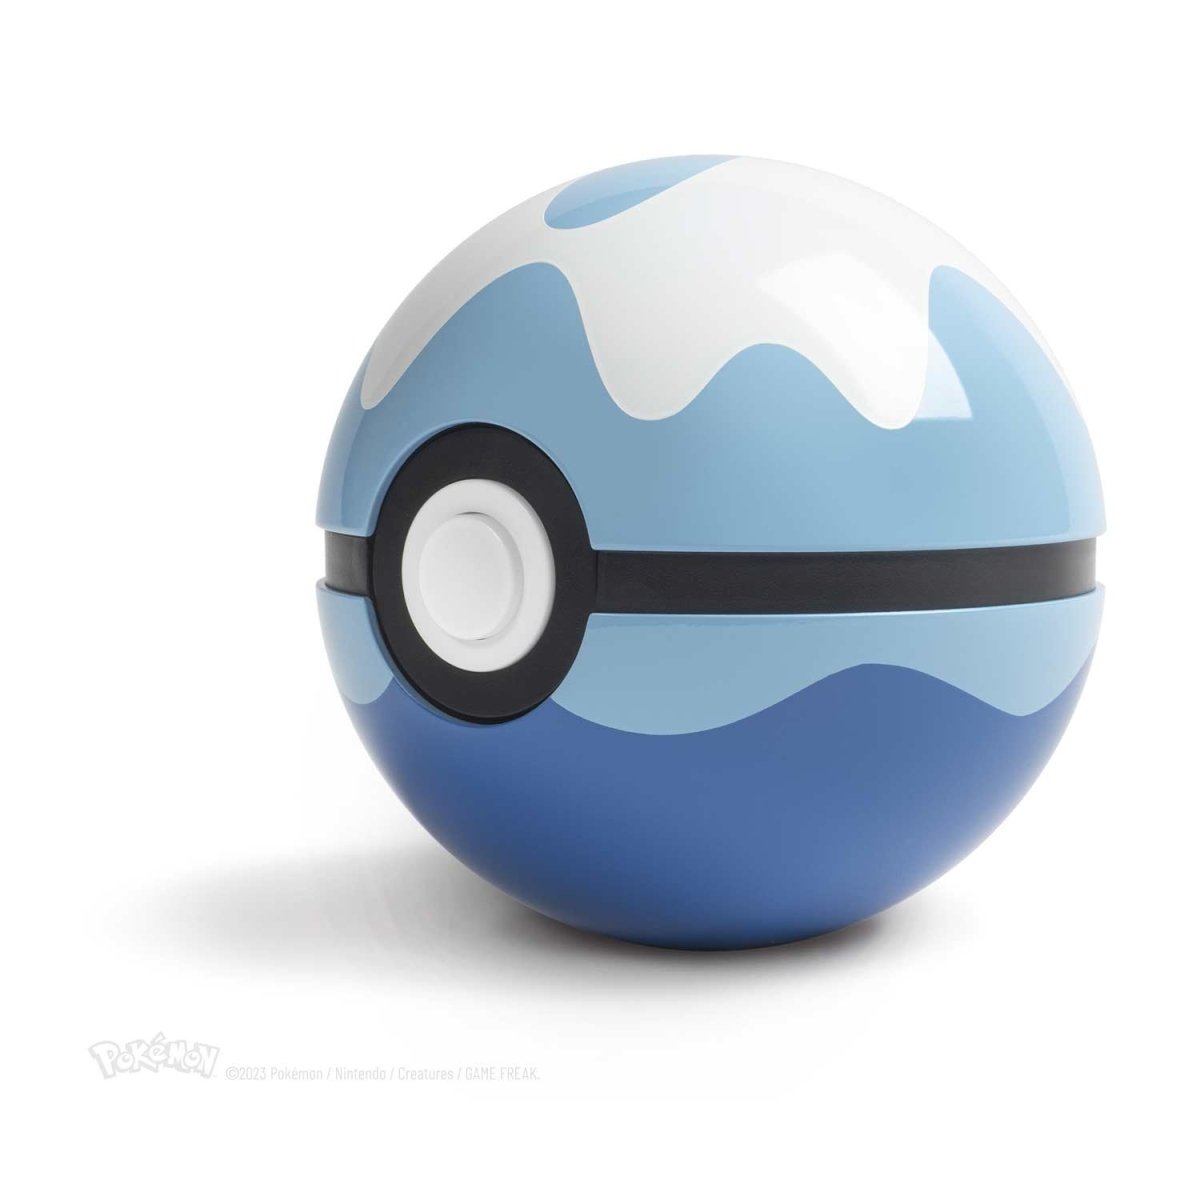 The Top 10 Poké Ball Types in the Pokémon Games